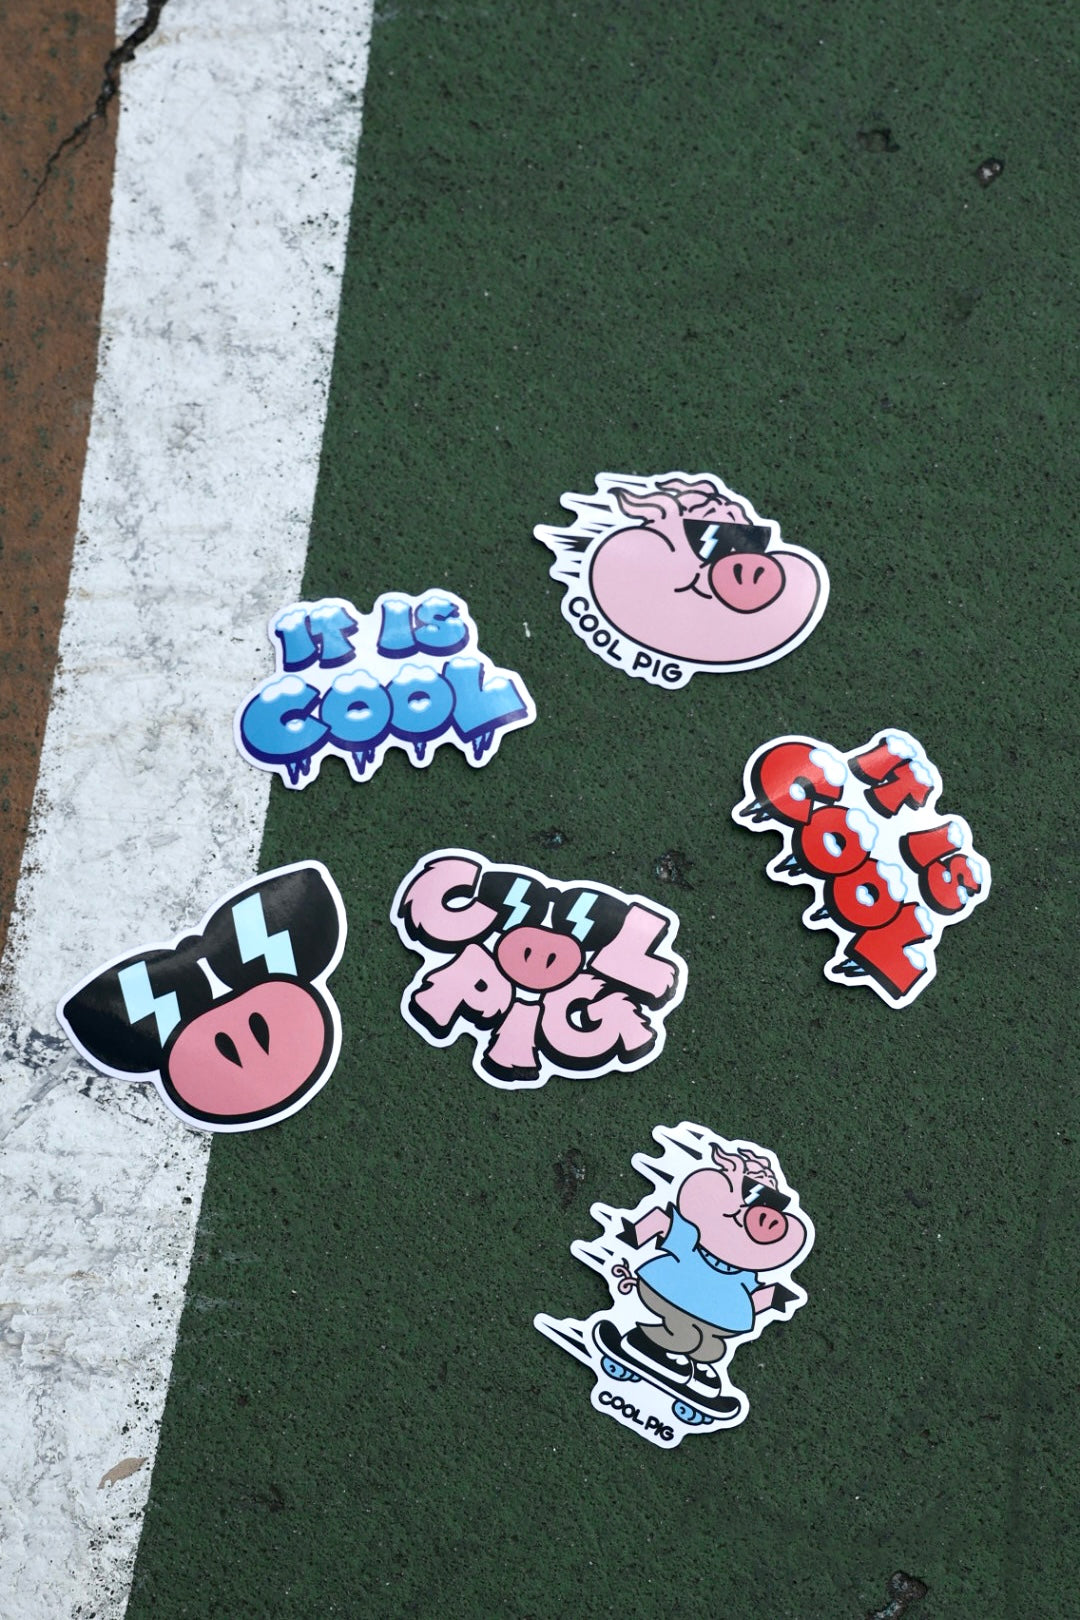 Cool Pig Sticker Pack